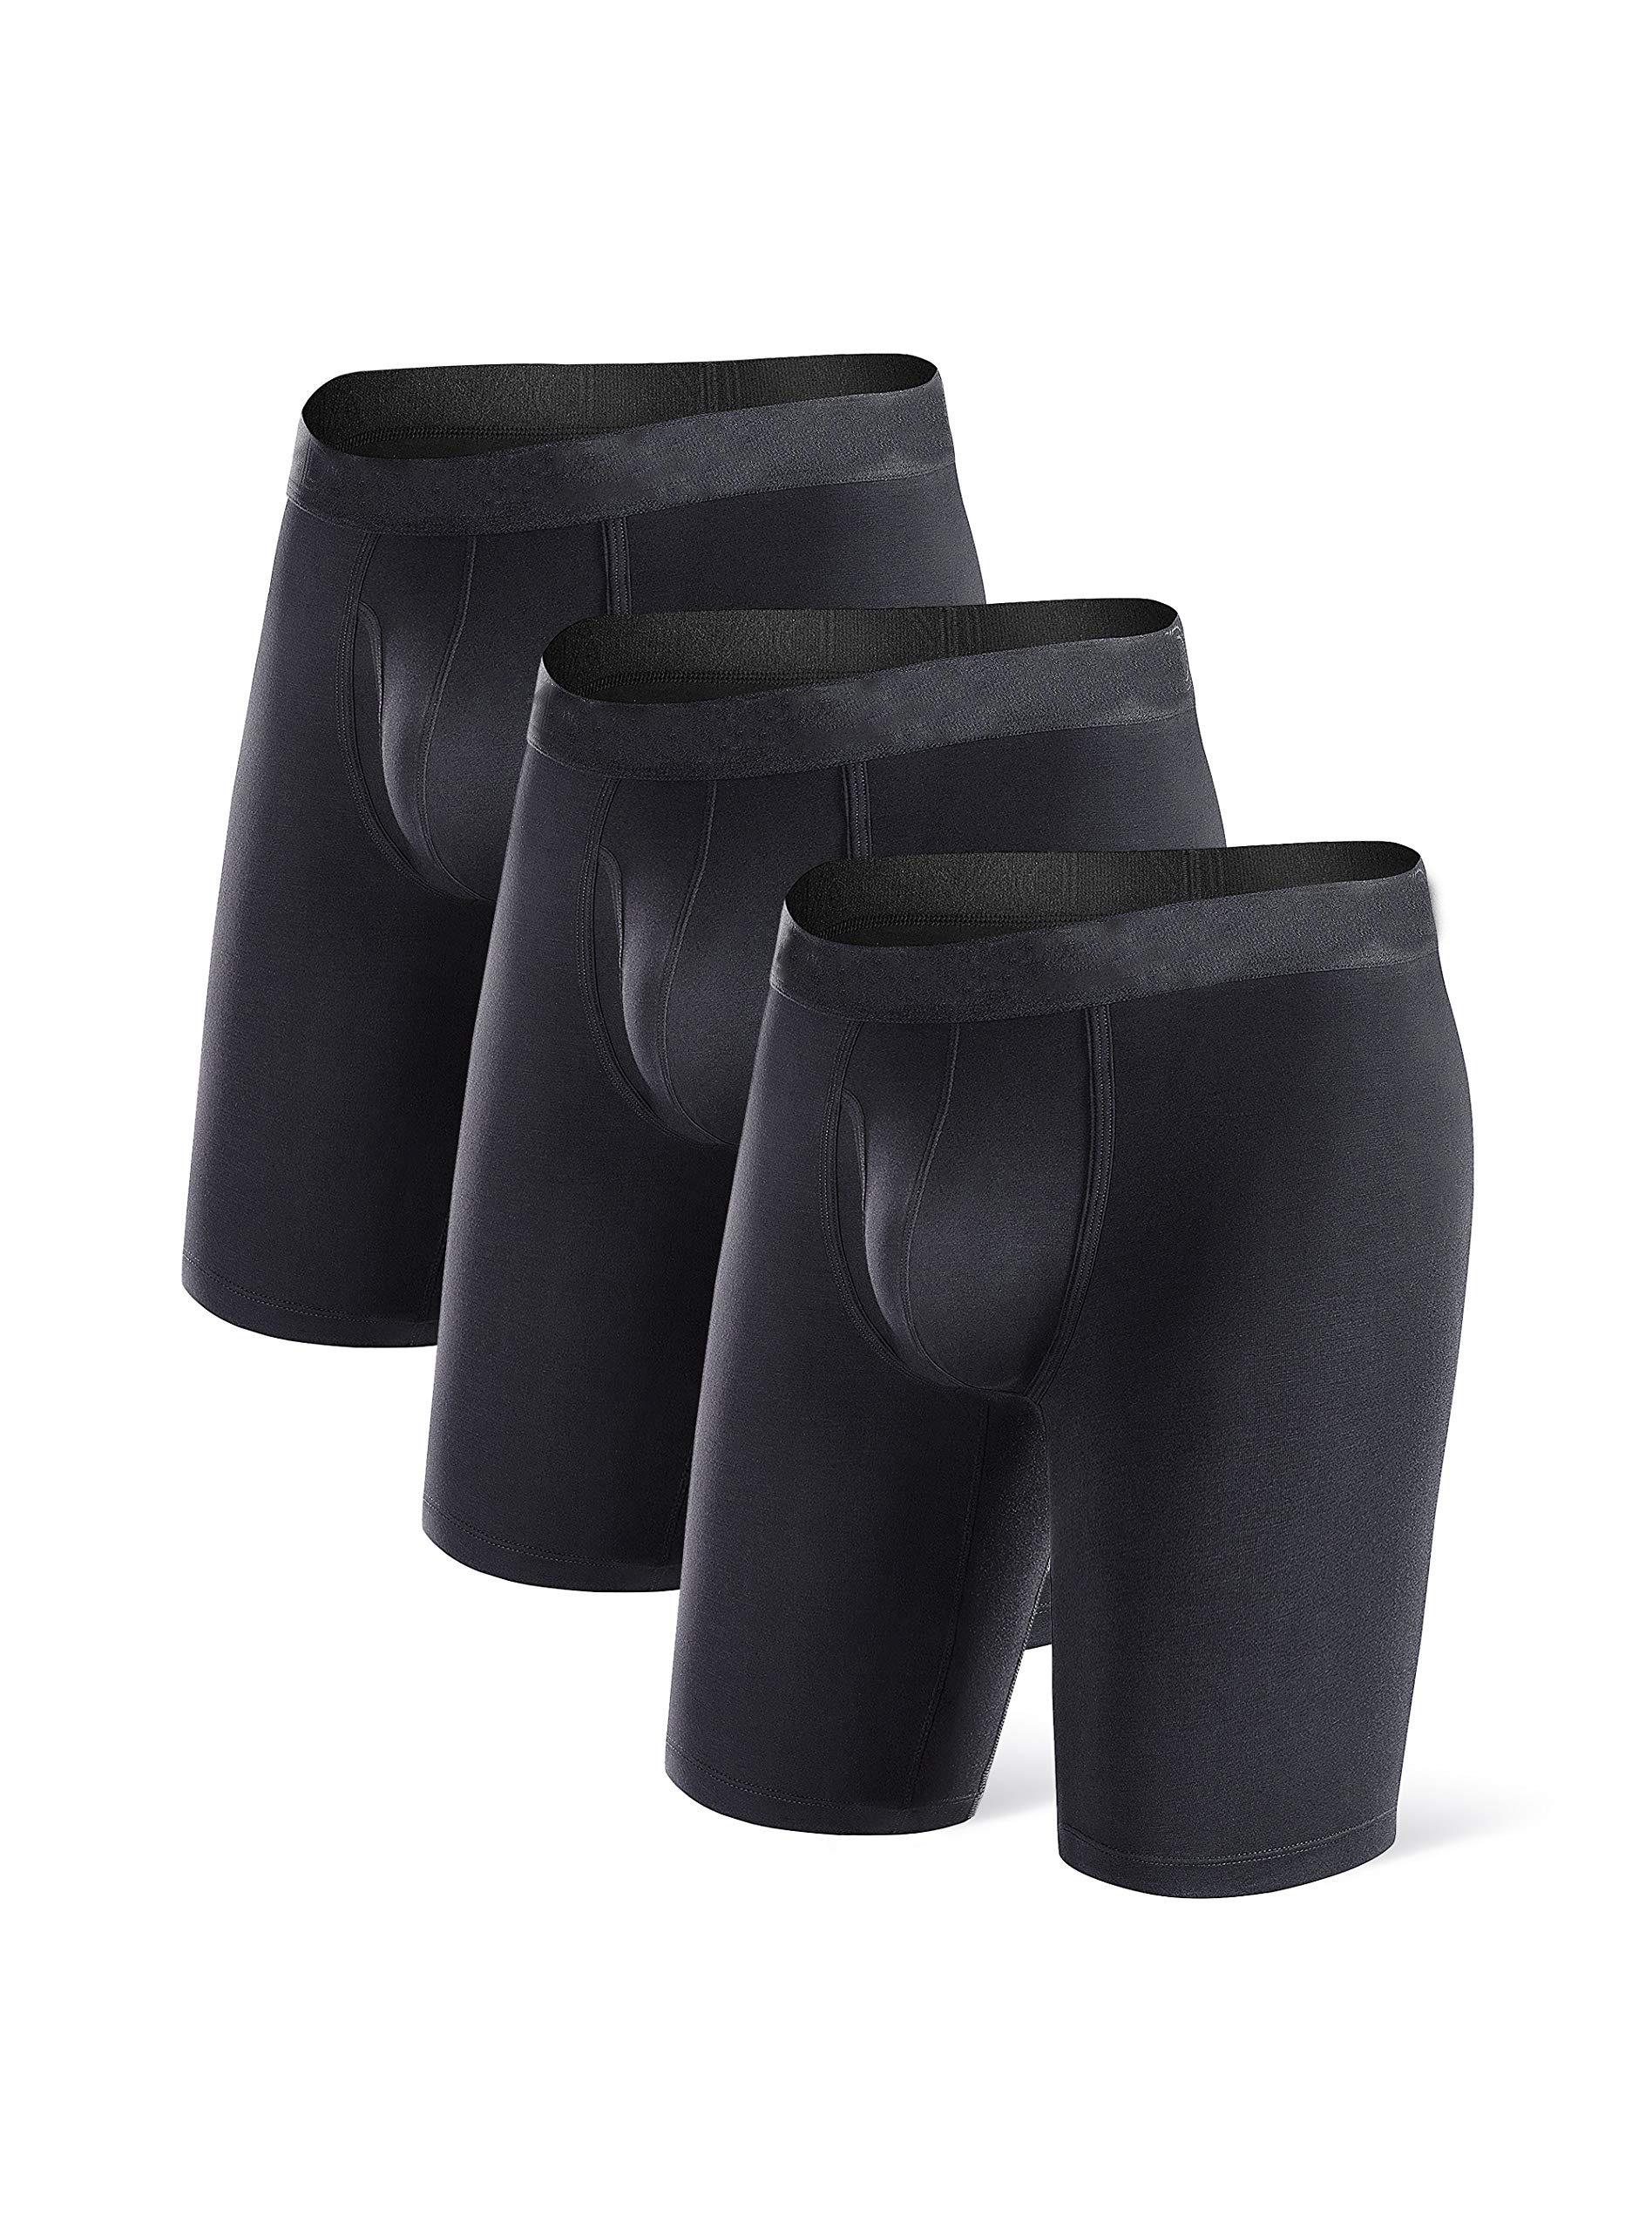 Men's Bamboo Fiber Underwear Manufacturers China - Customized Products  Wholesale - Xiamen Ebei